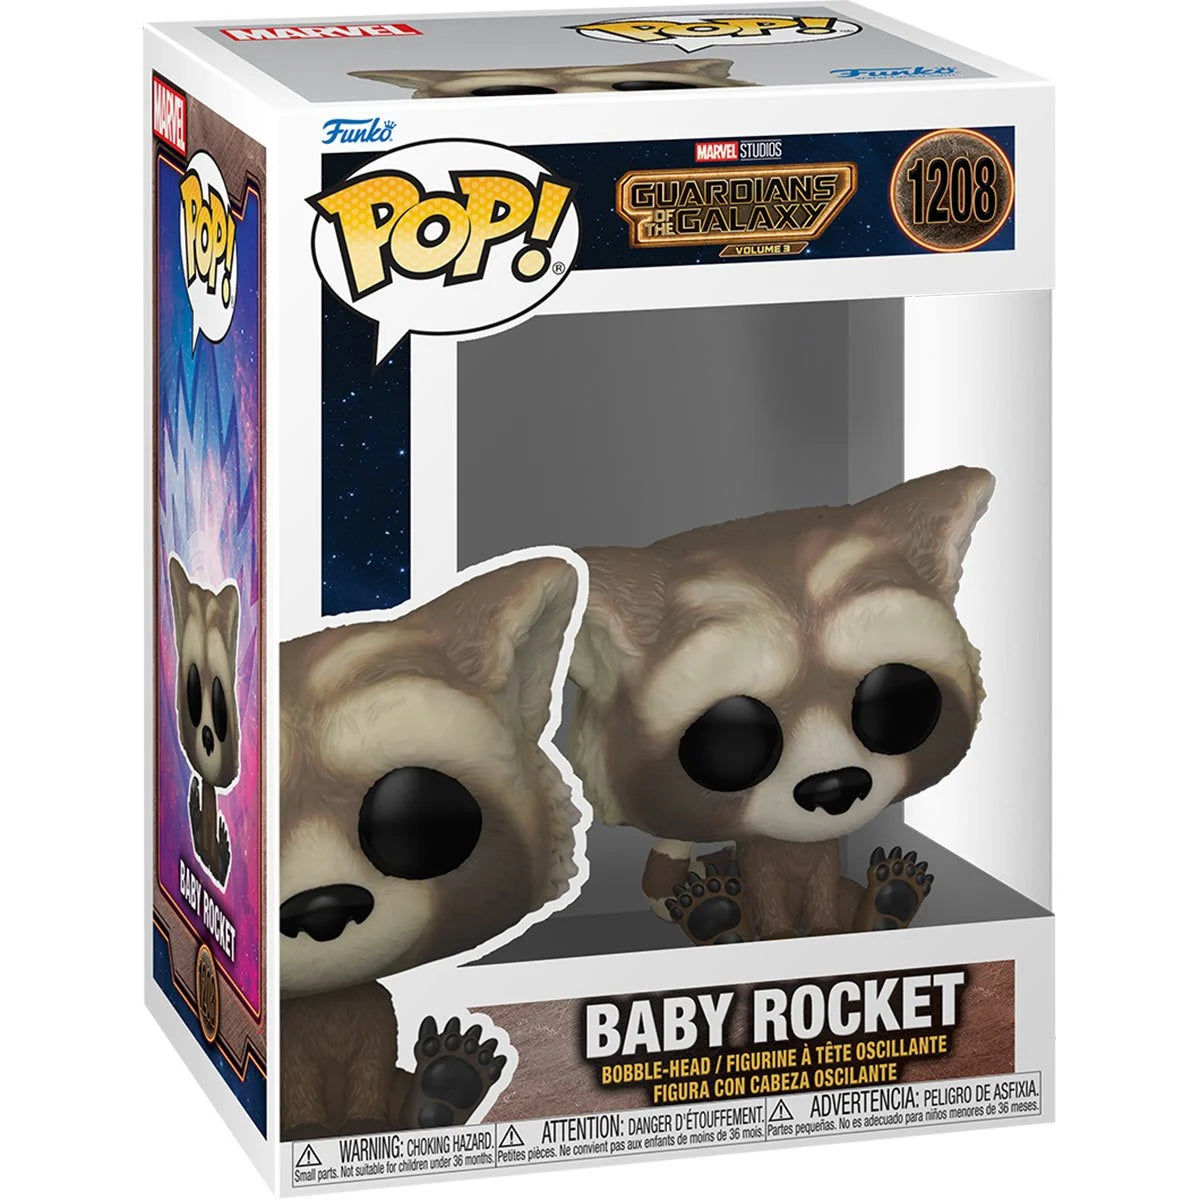 Guardians of the Galaxy Volume 3 Baby Rocket Pop! Vinyl Figure #1208